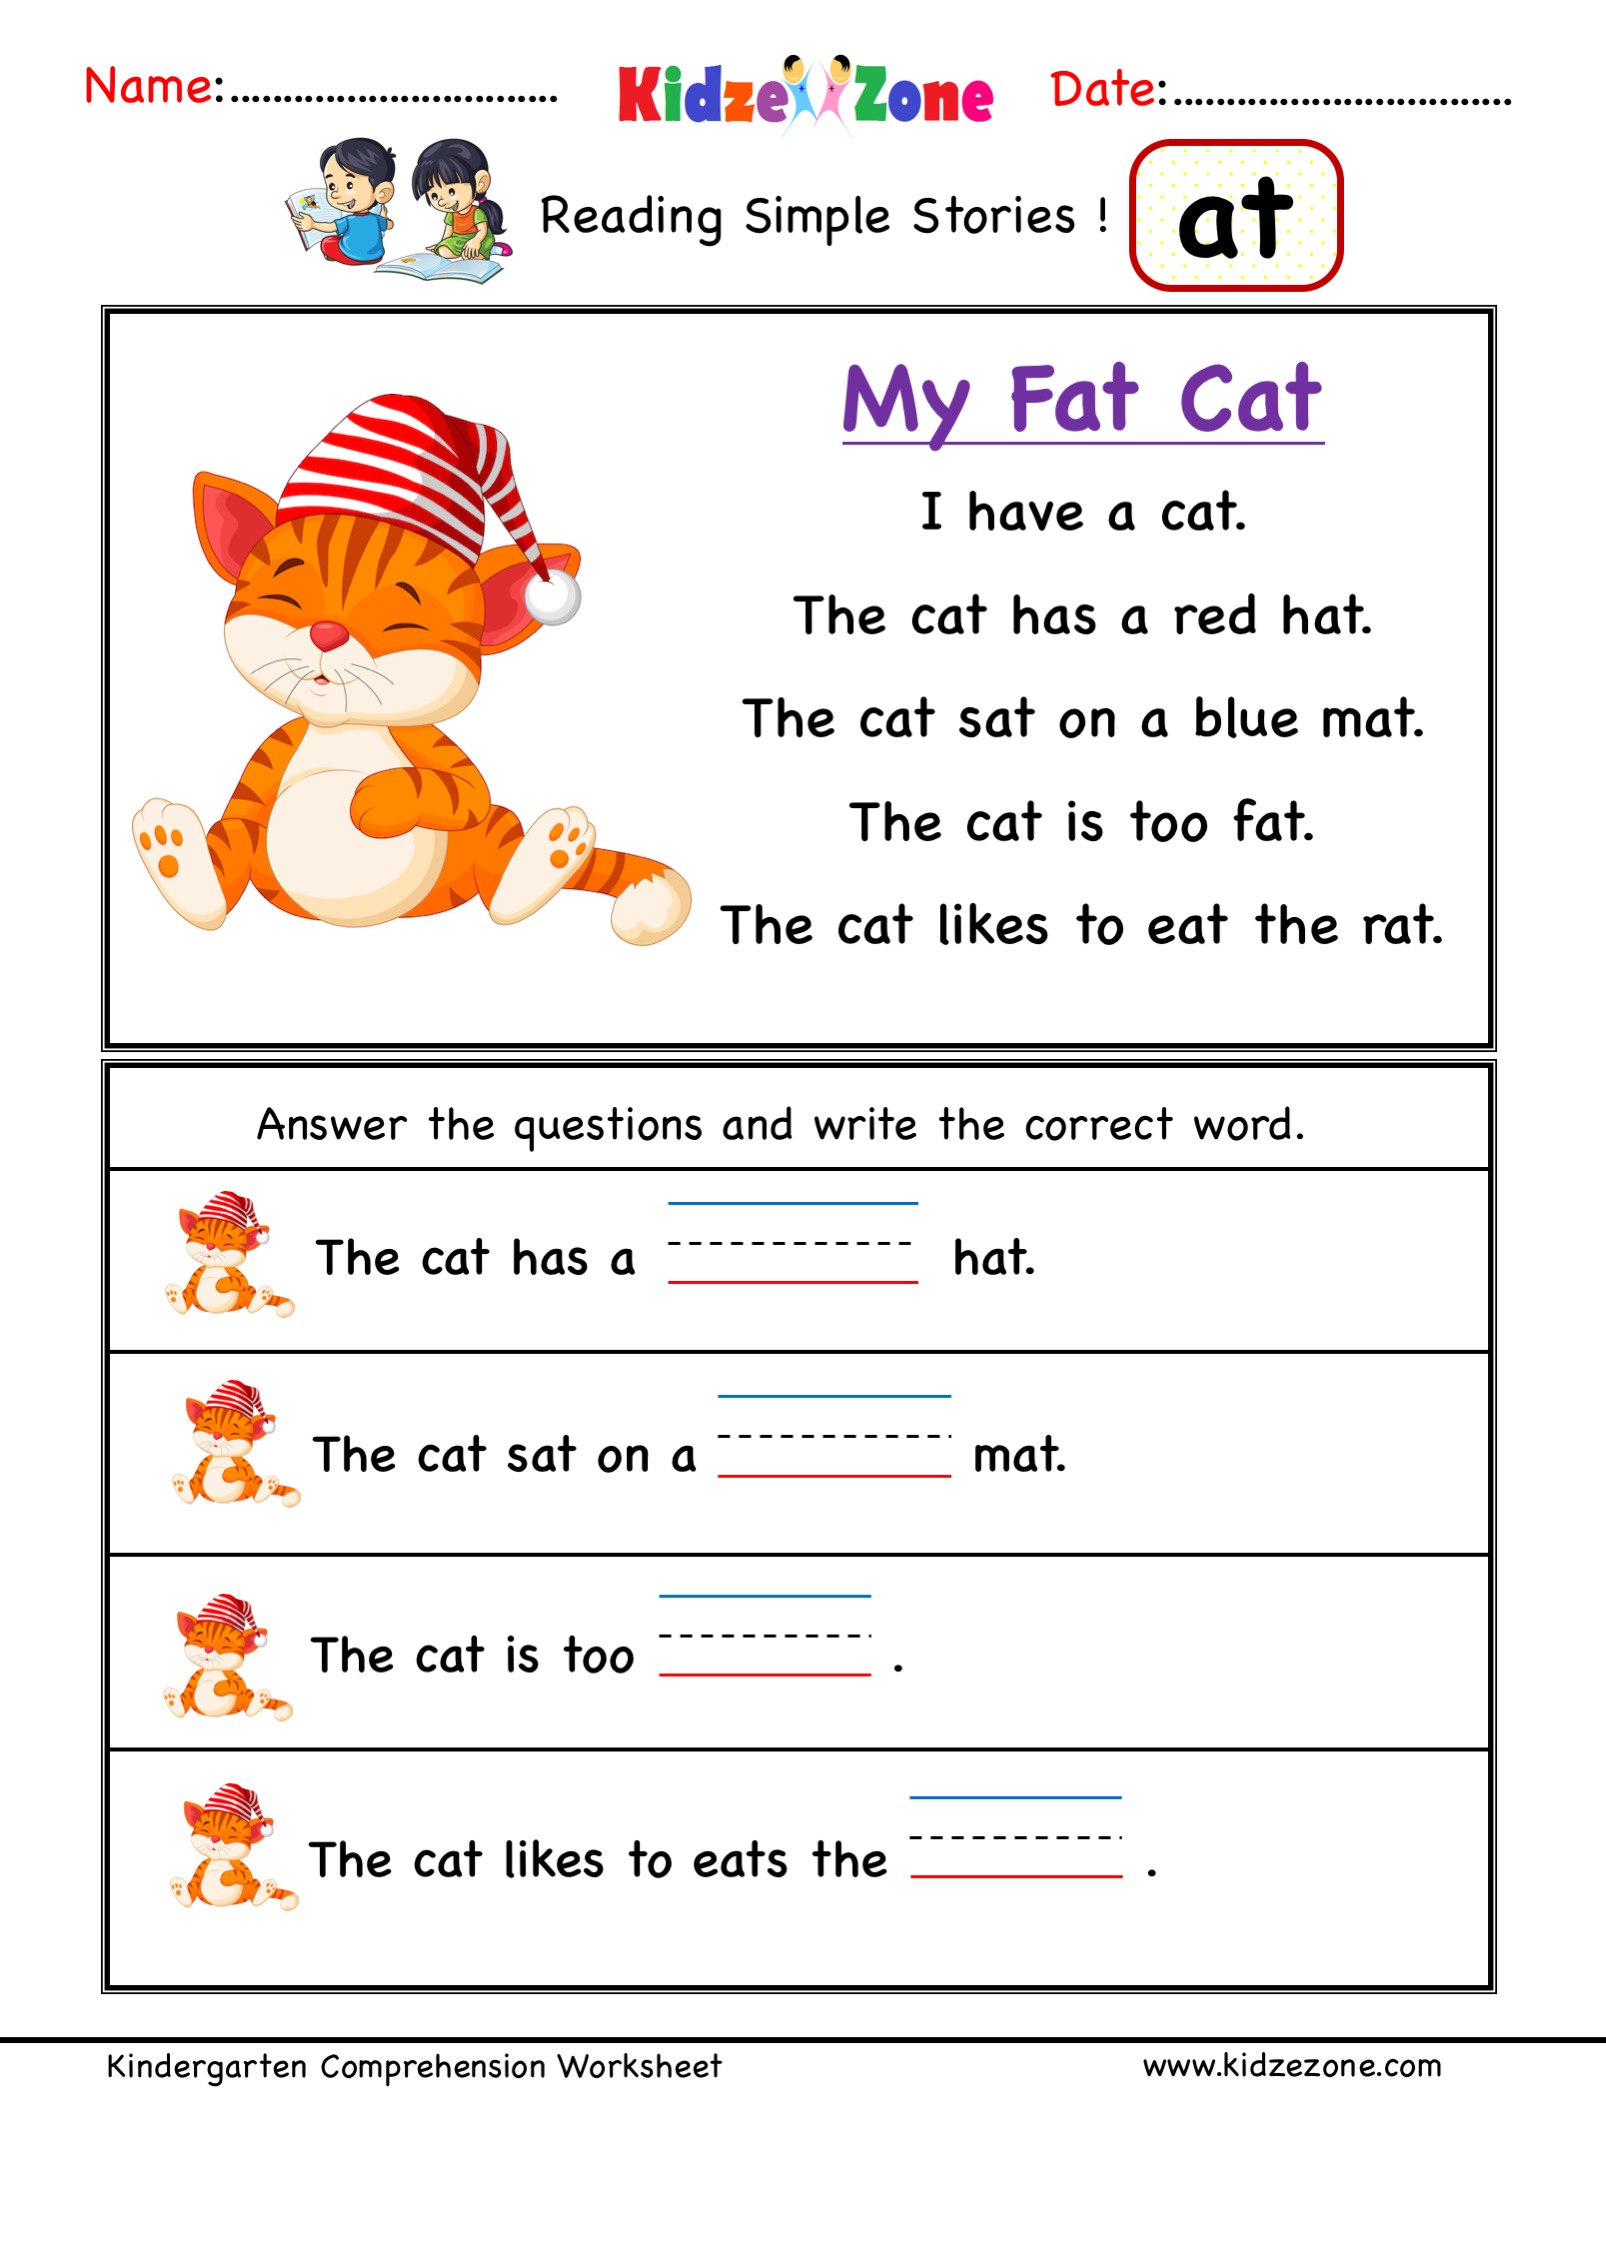 Kindergarten worksheets - at word family - reading Comprehension 3